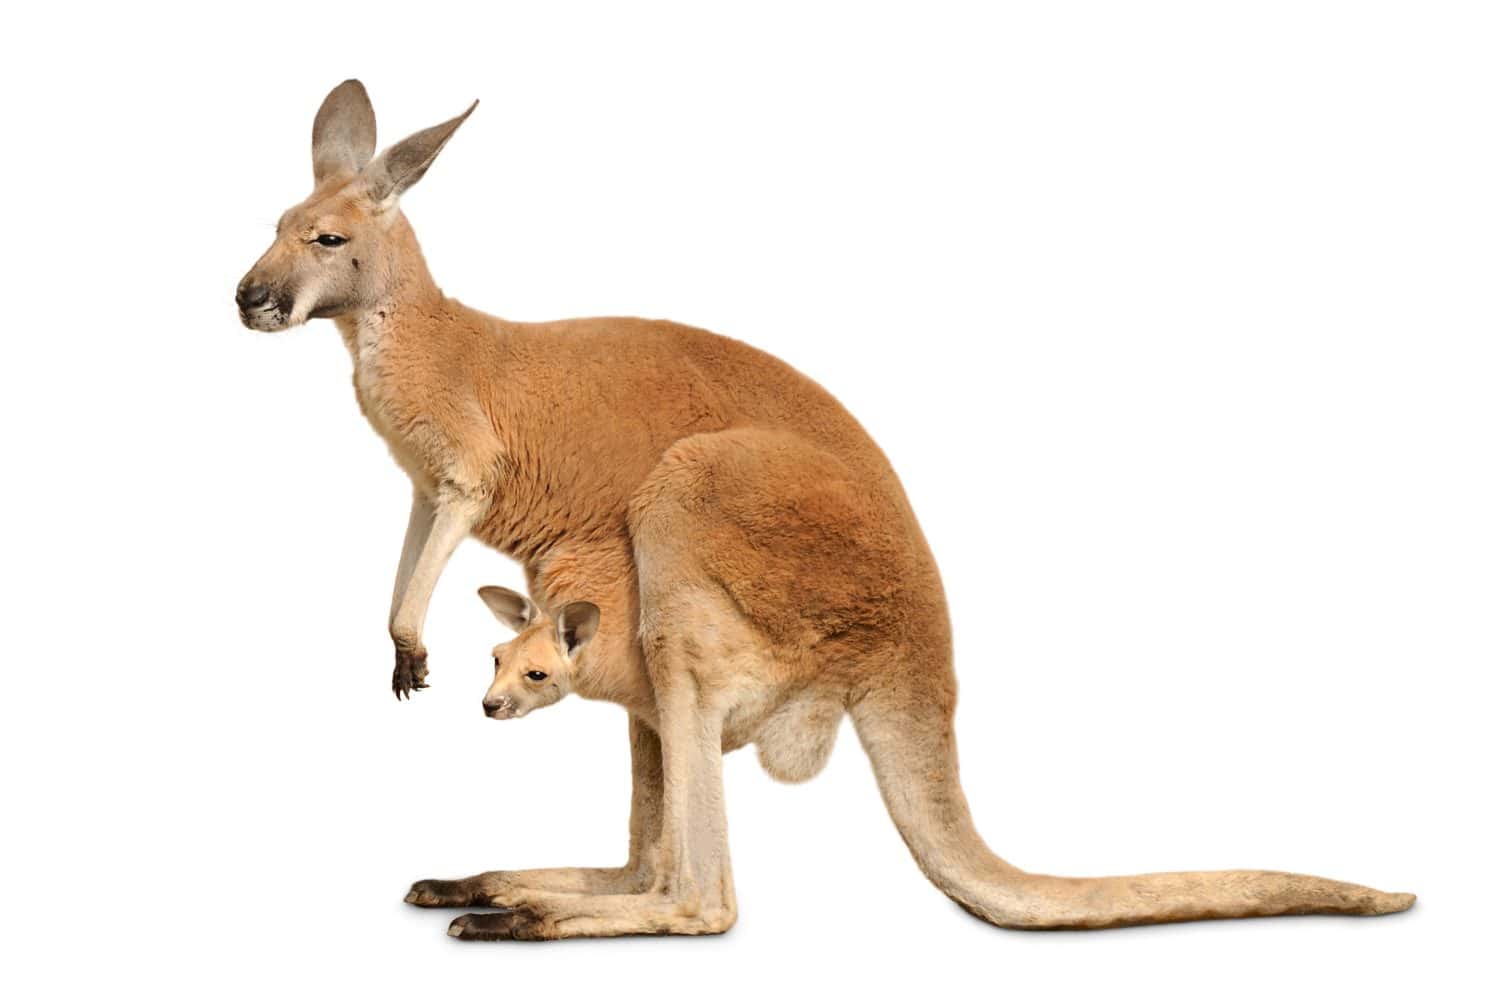 5 Kangaroo Joey Facts You've Never Heard Before